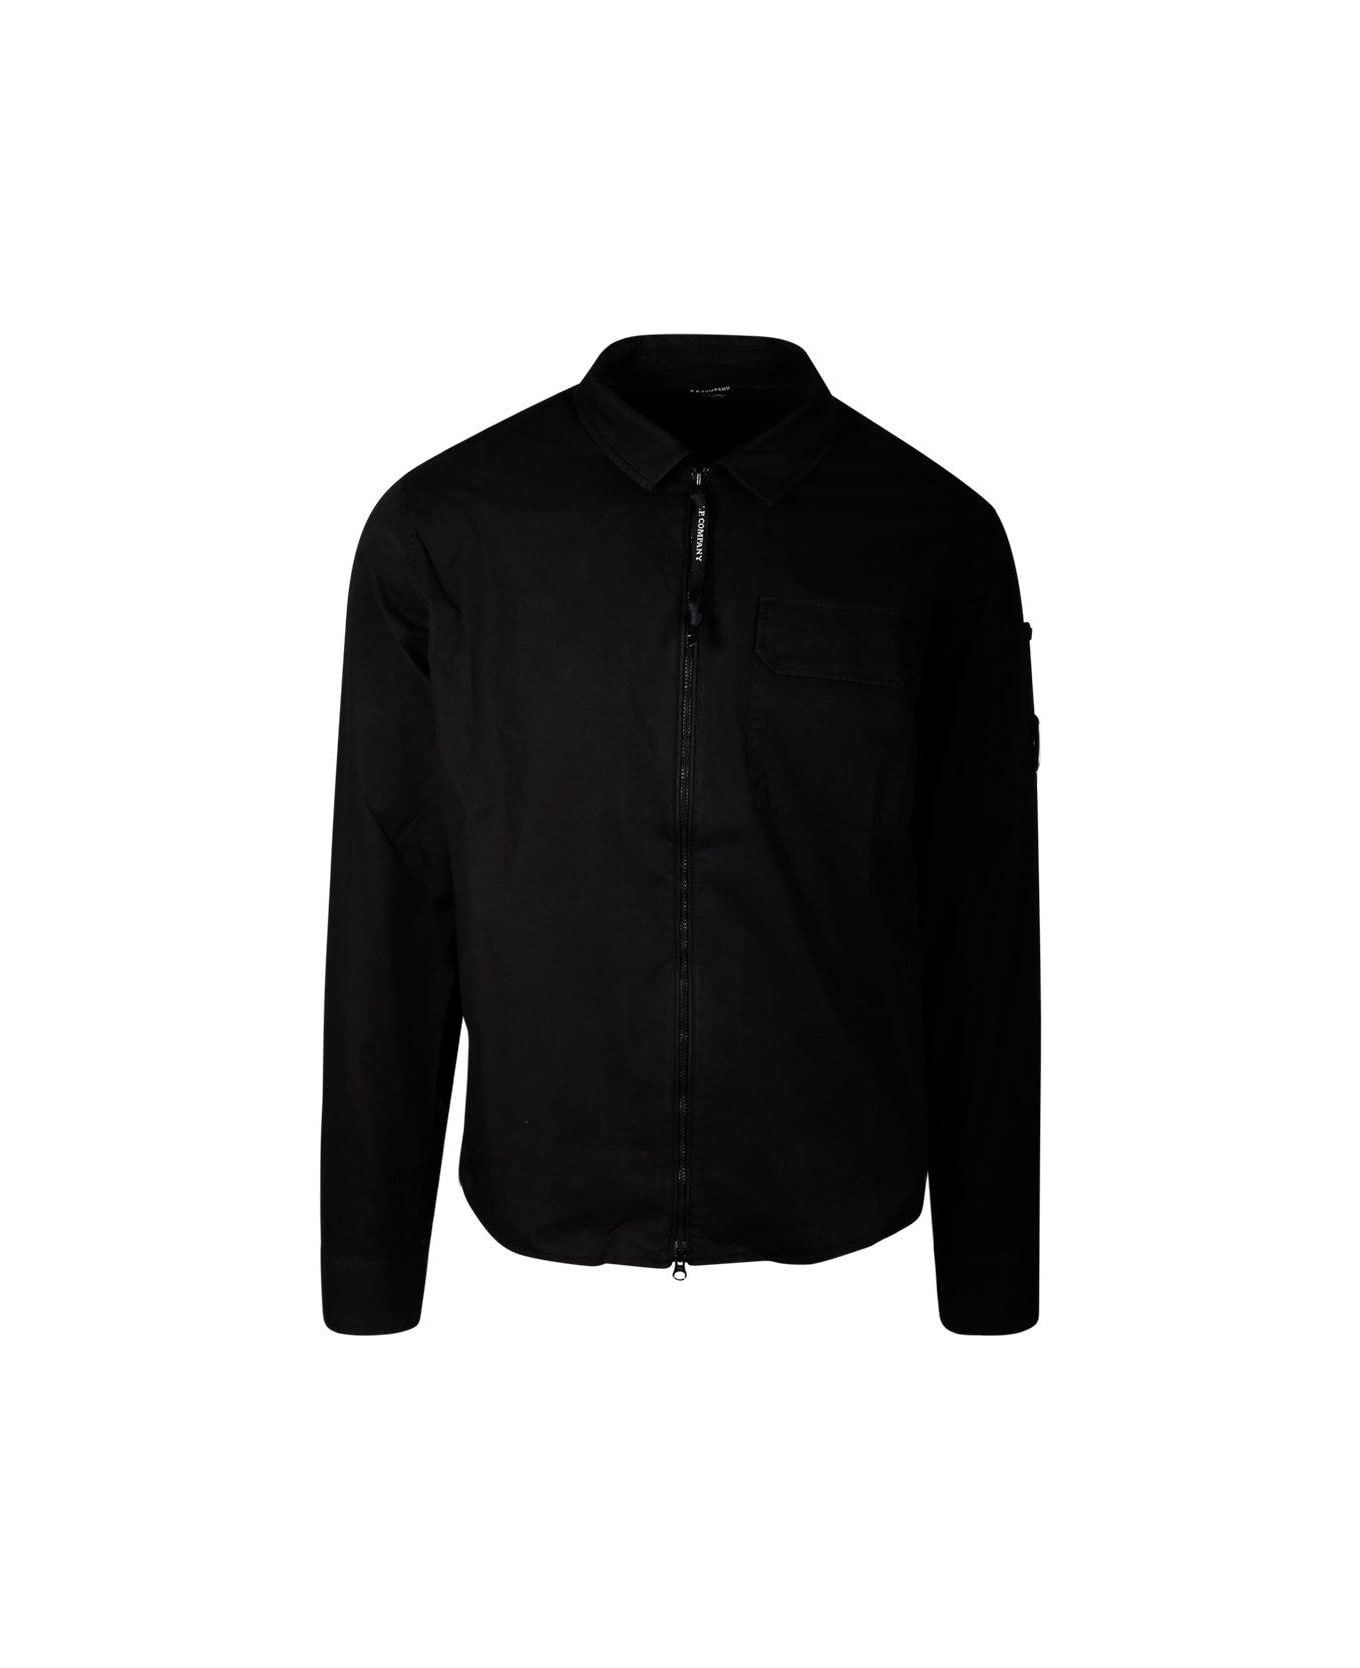 C.P. Company Zip Up Collared Shirt - BLACK